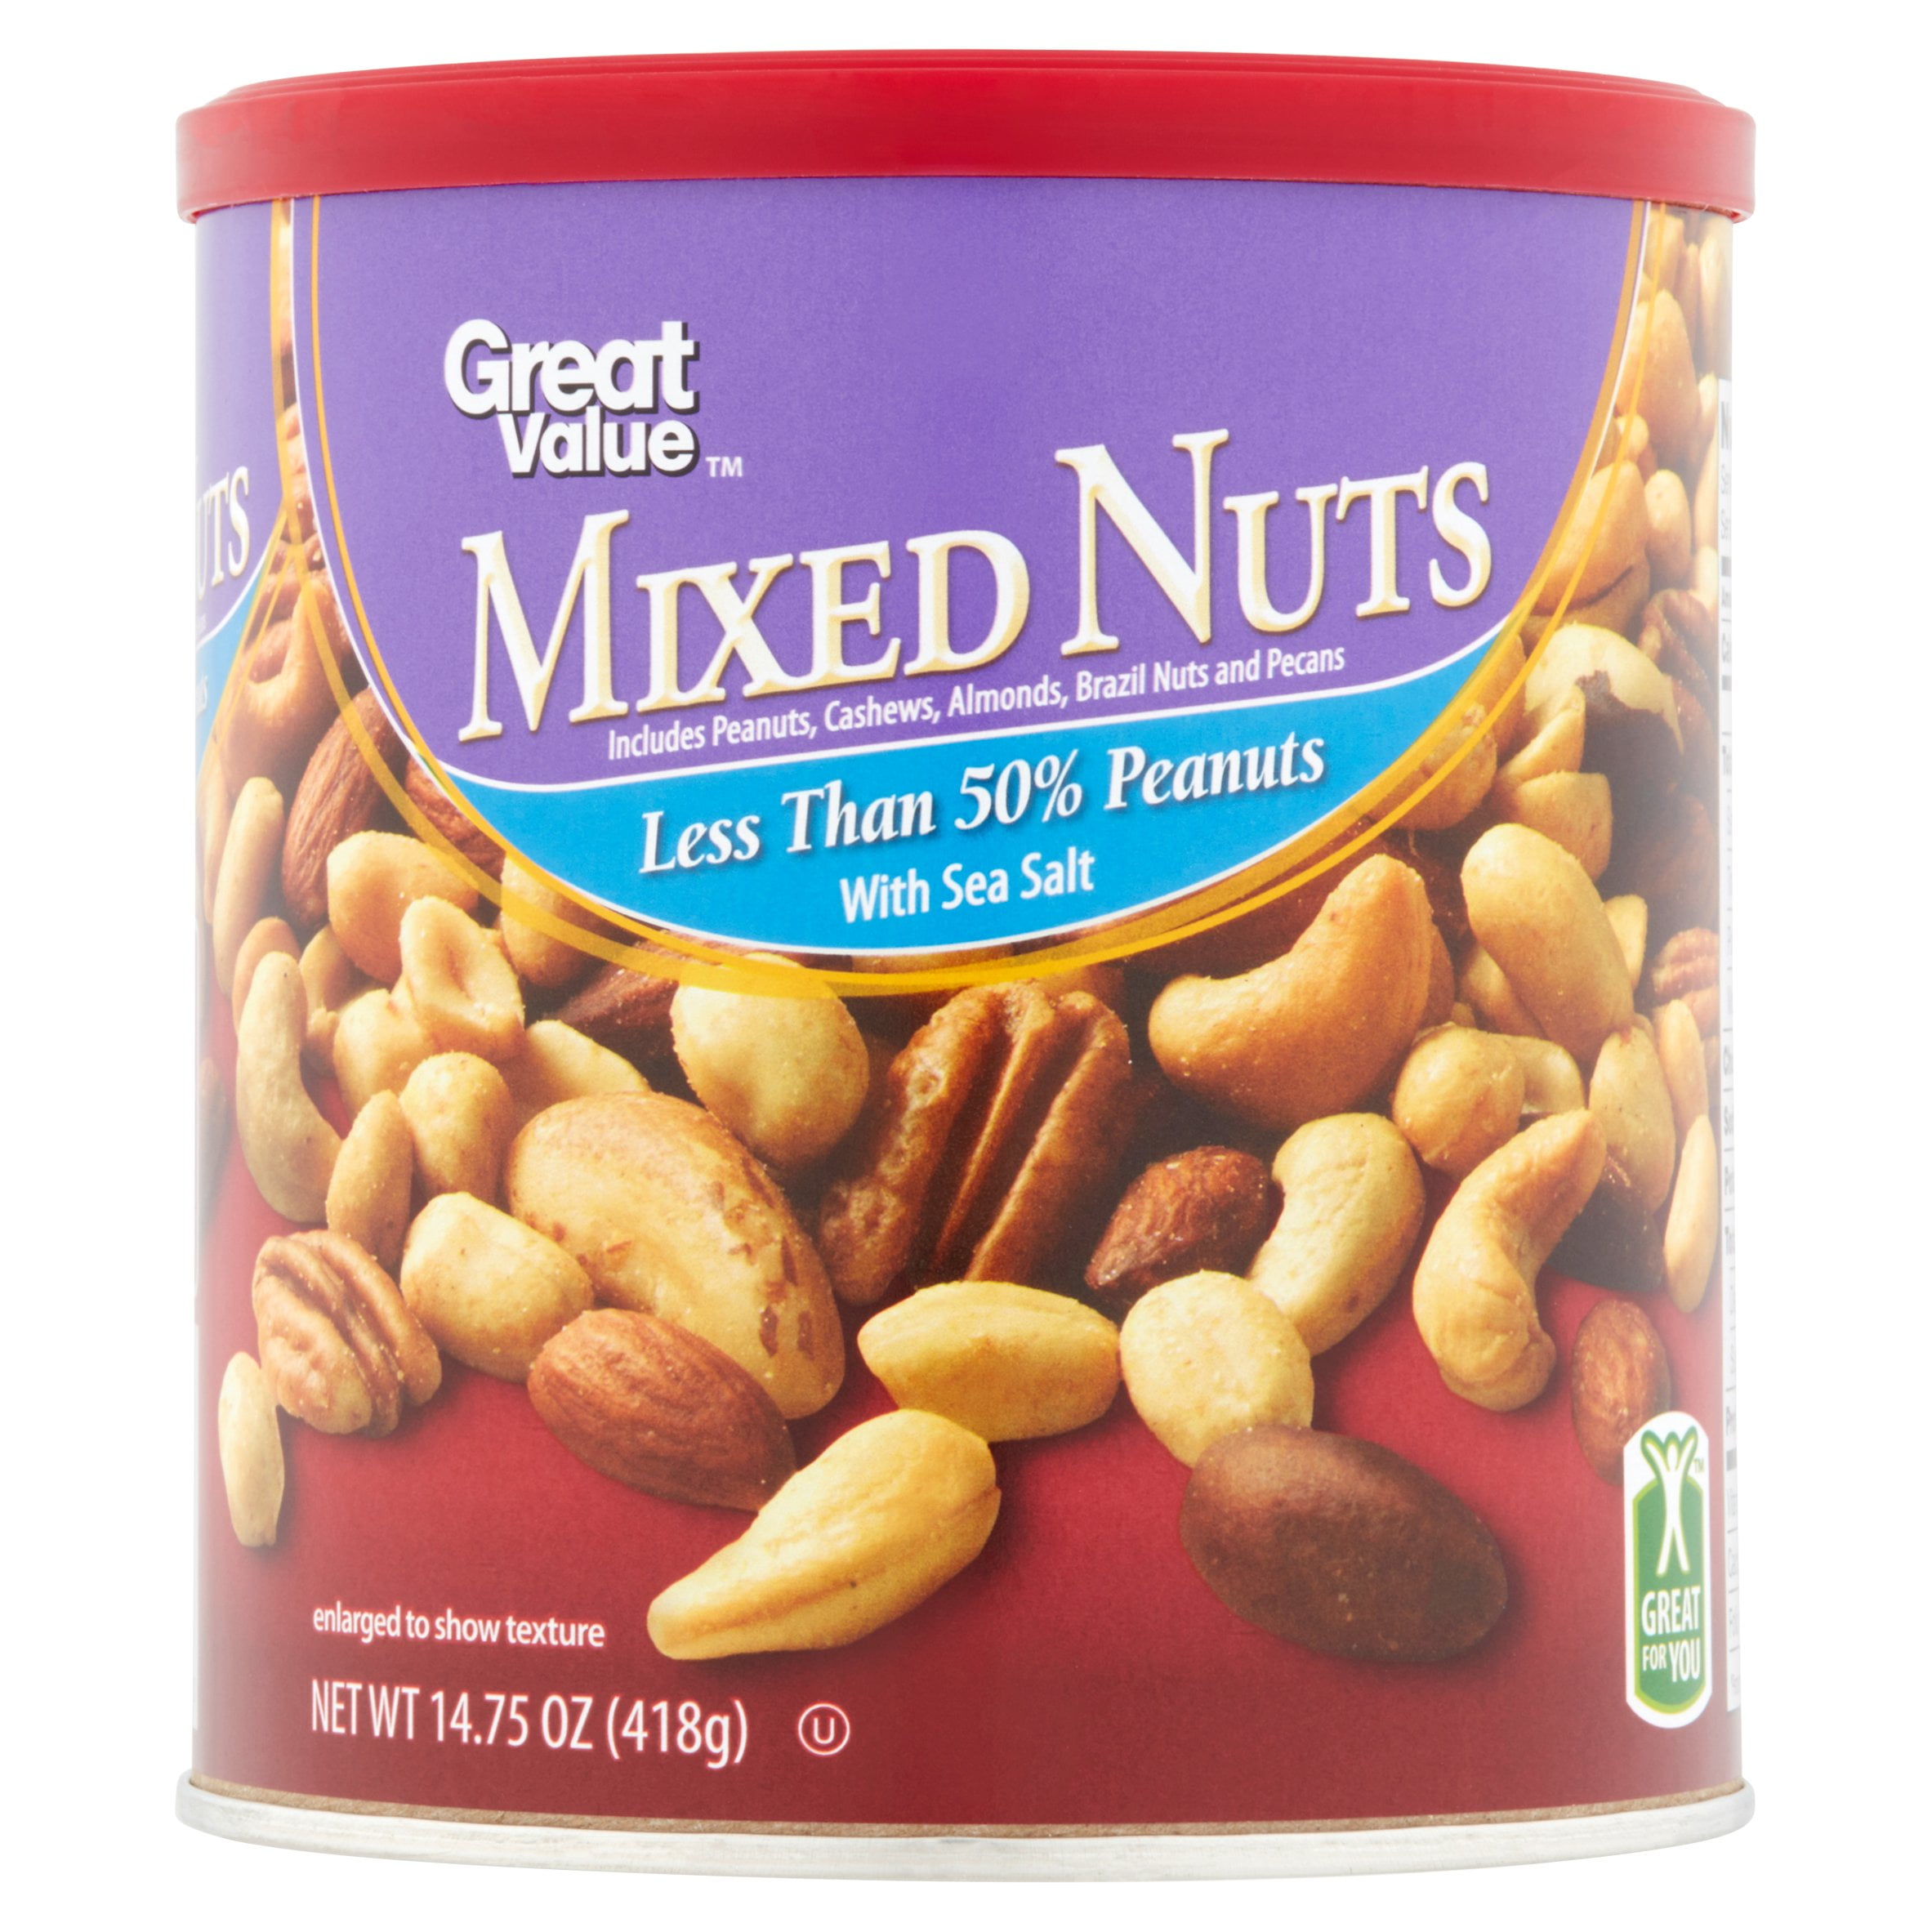 Как переводится nut. Нутс. Daily Nuts орехи. Great value Nuts. Nuts перевод.